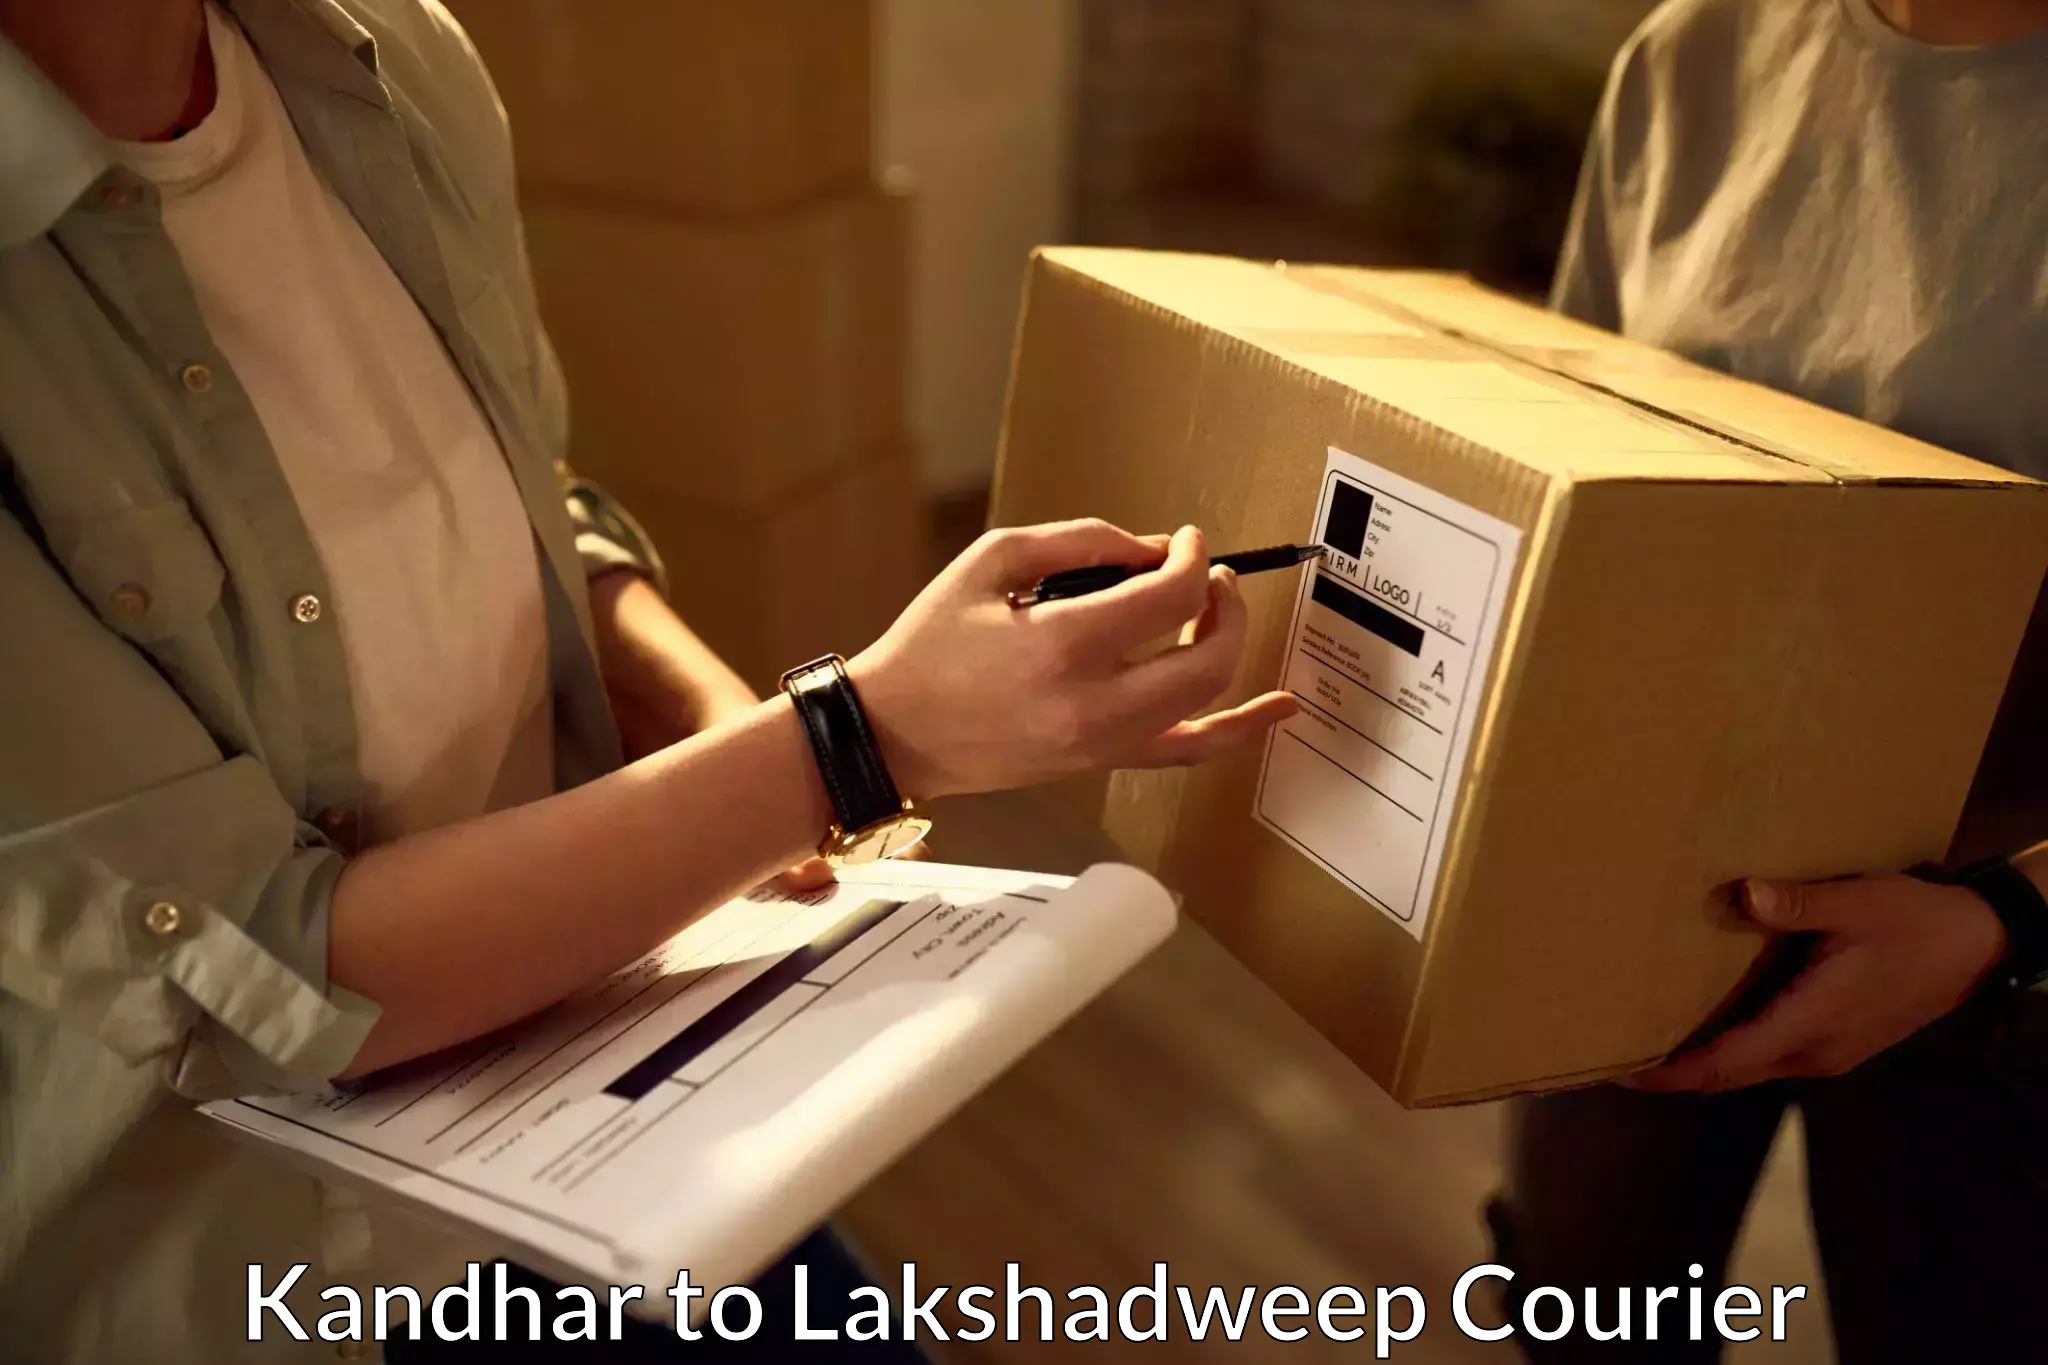 Logistics service provider Kandhar to Lakshadweep